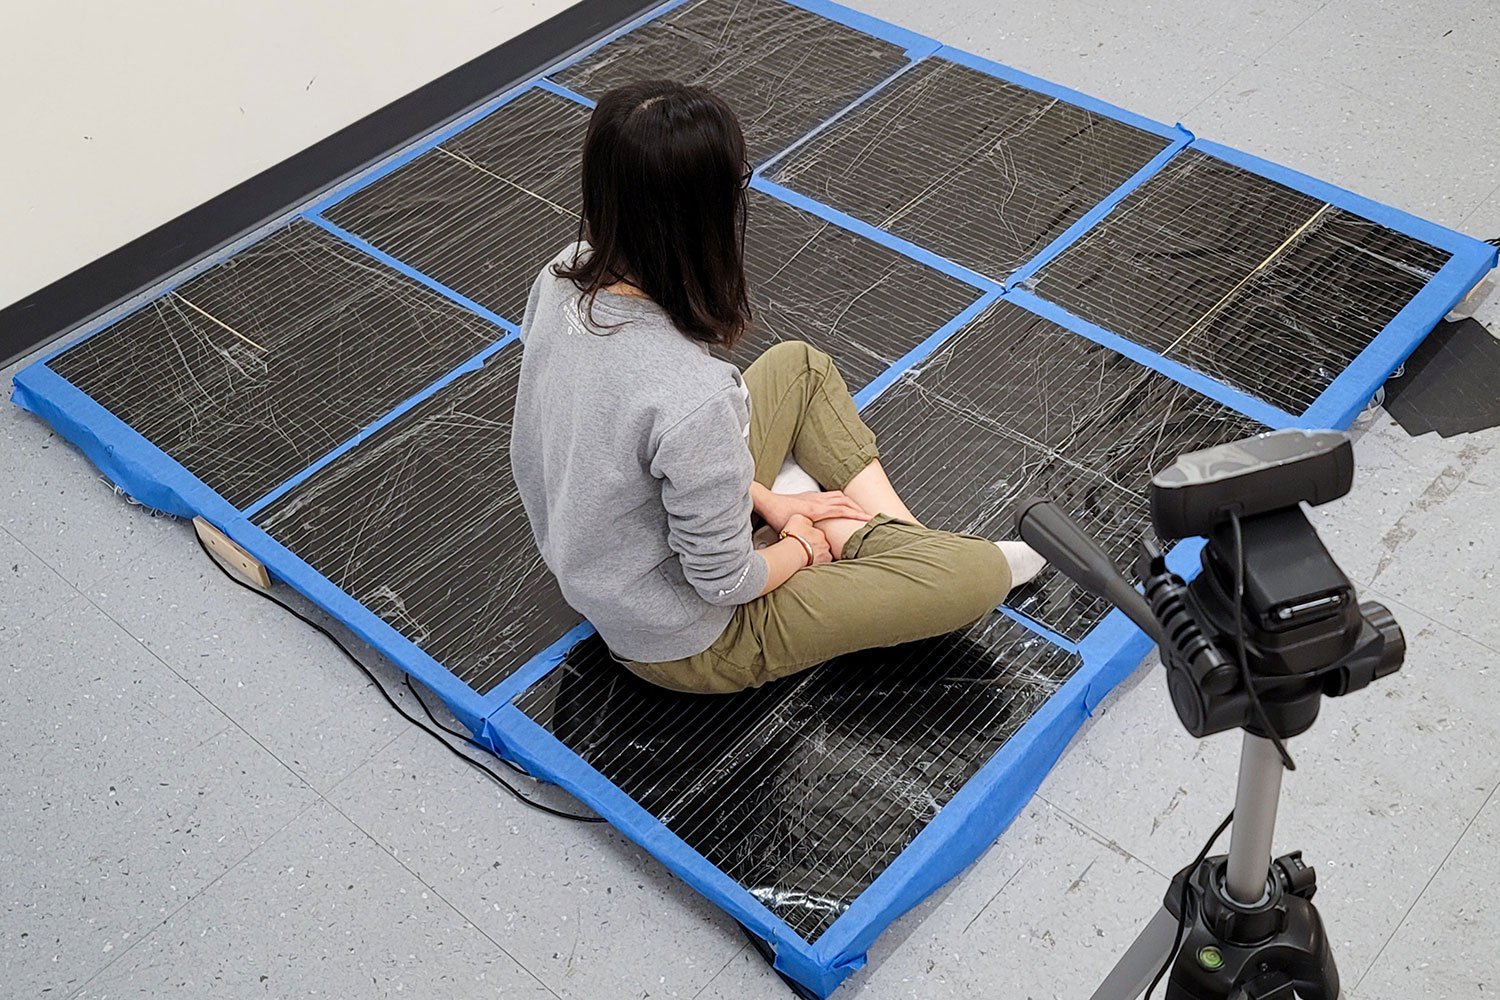 MIT's intelligent carpet estimates human poses without using camera